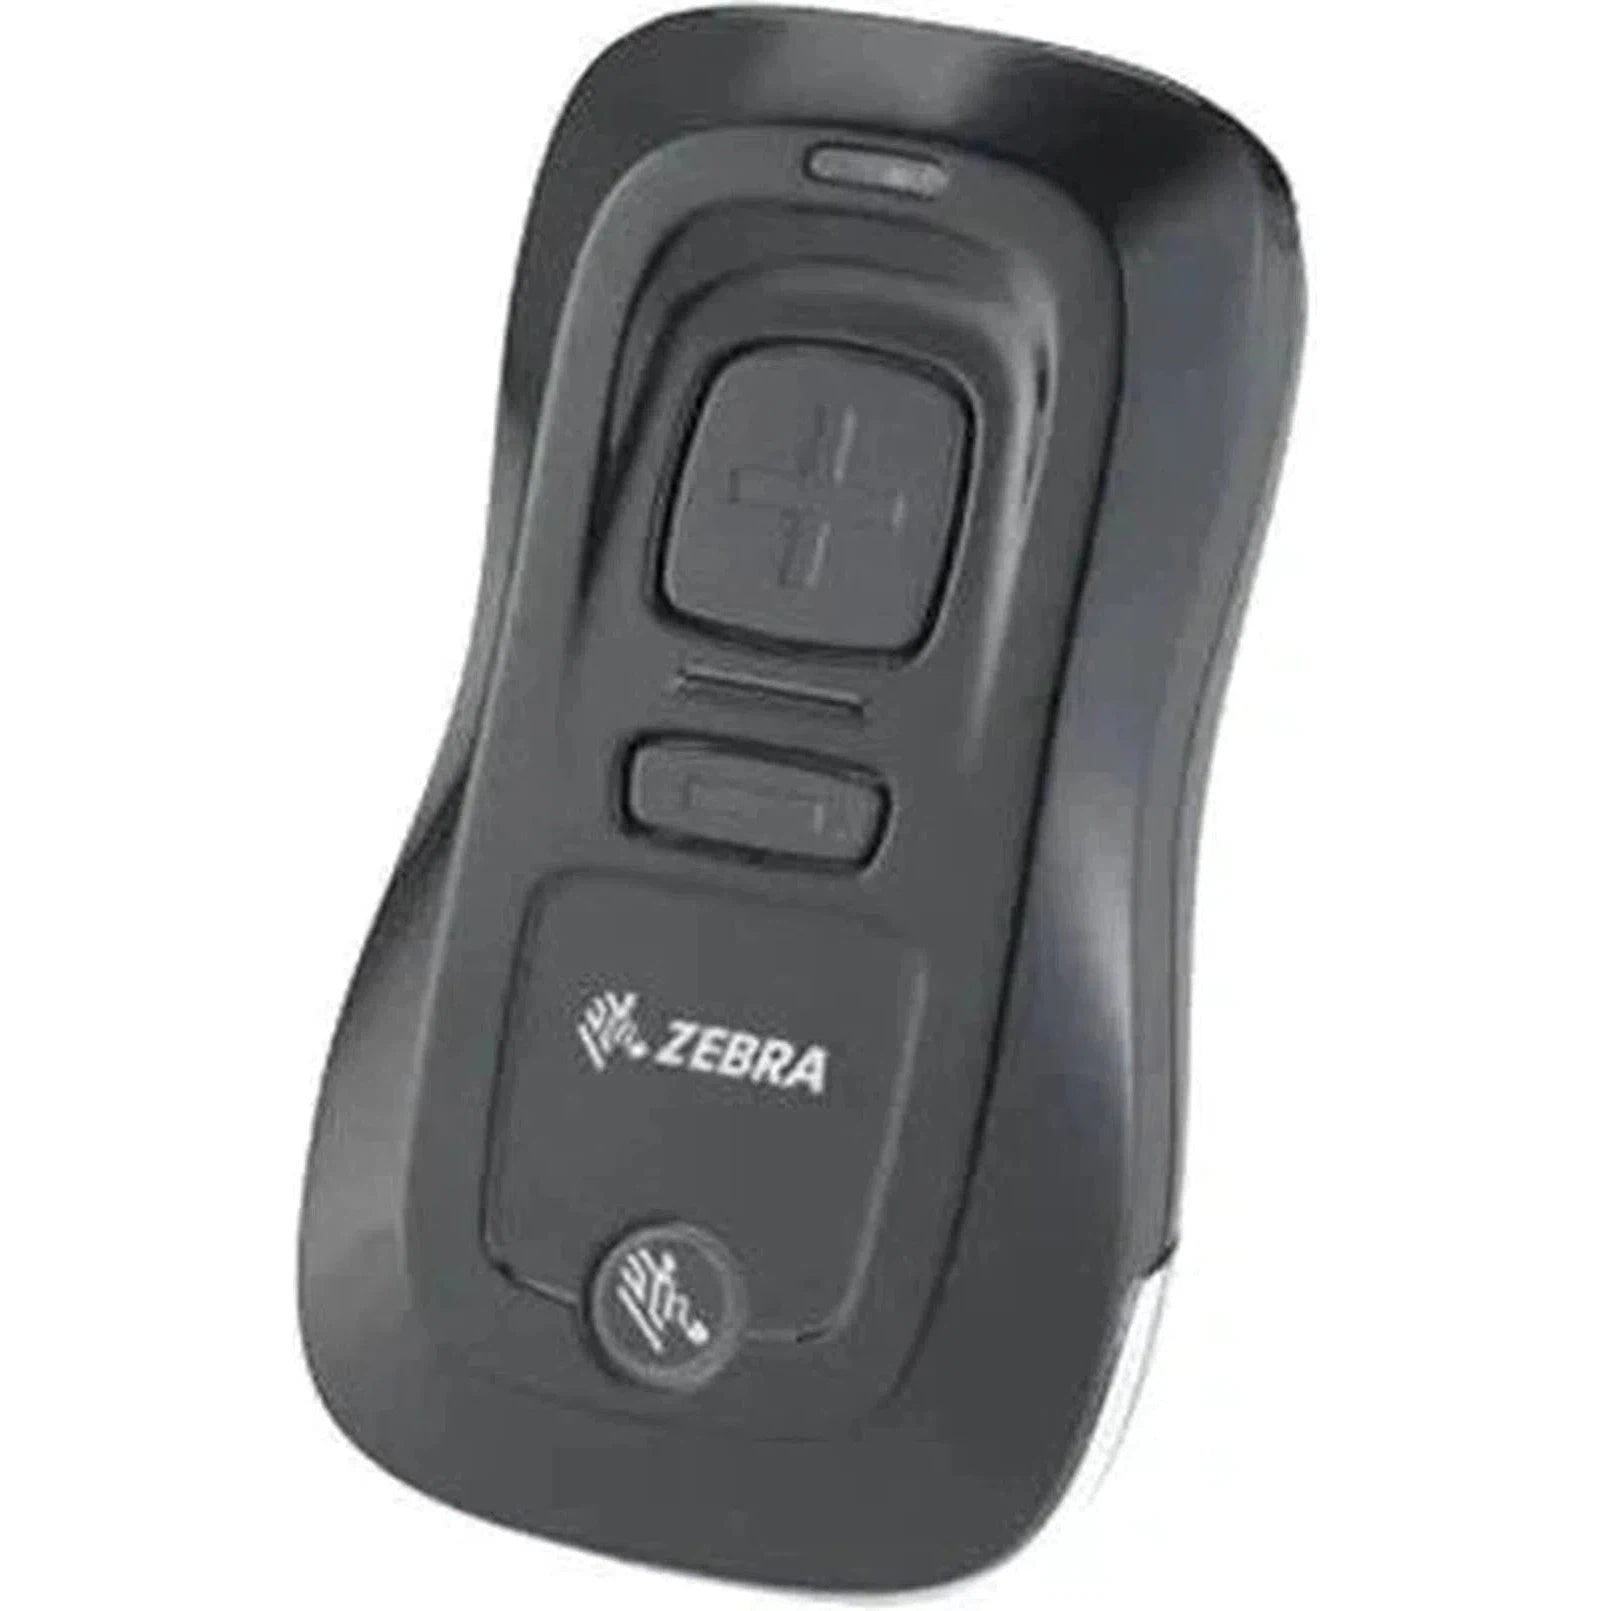 Motorola Symbol Cs3070 Batch/Bluetooth Scanner 1D Laser 512Mb Flash Memory.-1D Wireless scanner-Motorola-Star Light Kuwait